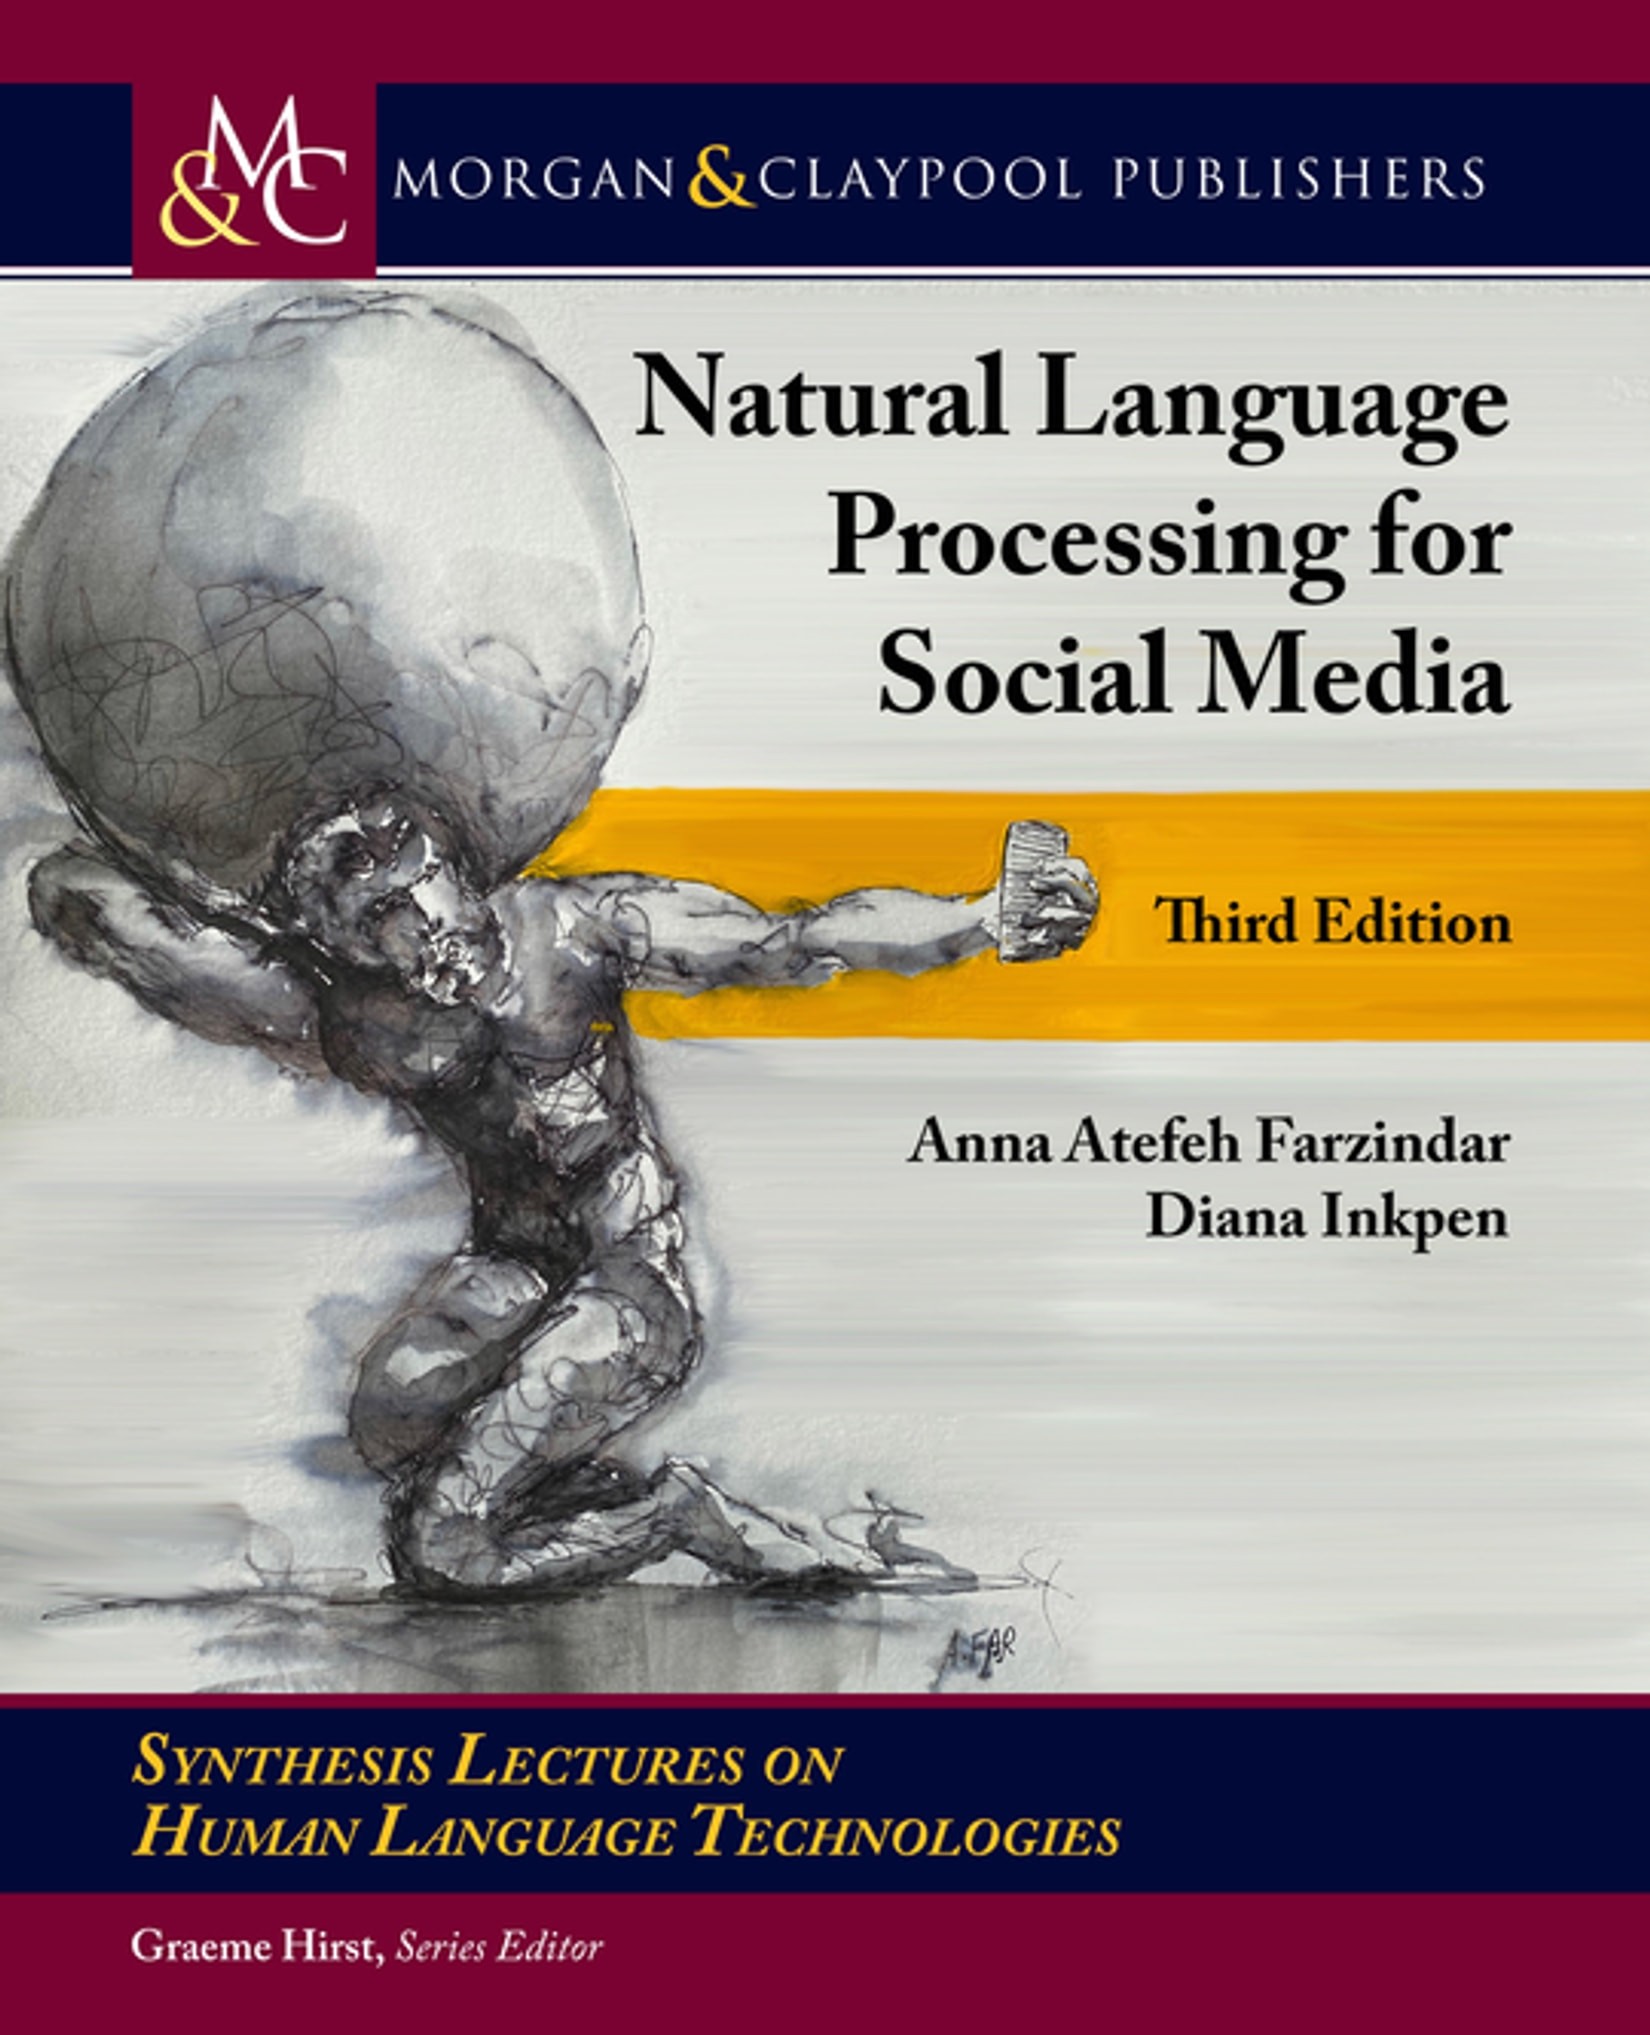 Natural Language Processing for Social Media: Third Edition